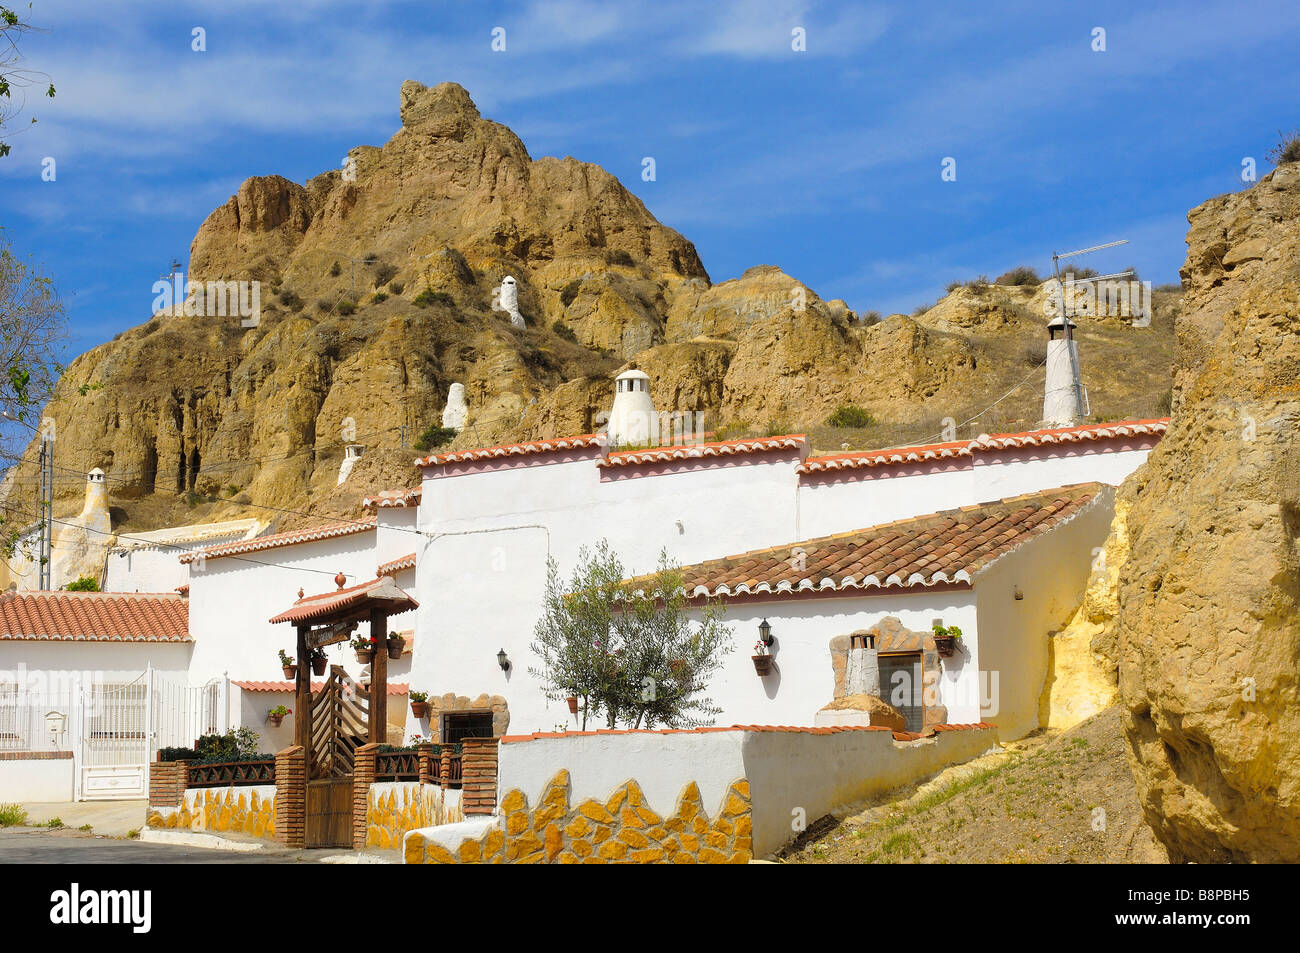 Cave house hotel at Santiago troglodyte quarter Guadix Marquesado region Granada province andalusia Spain Stock Photo